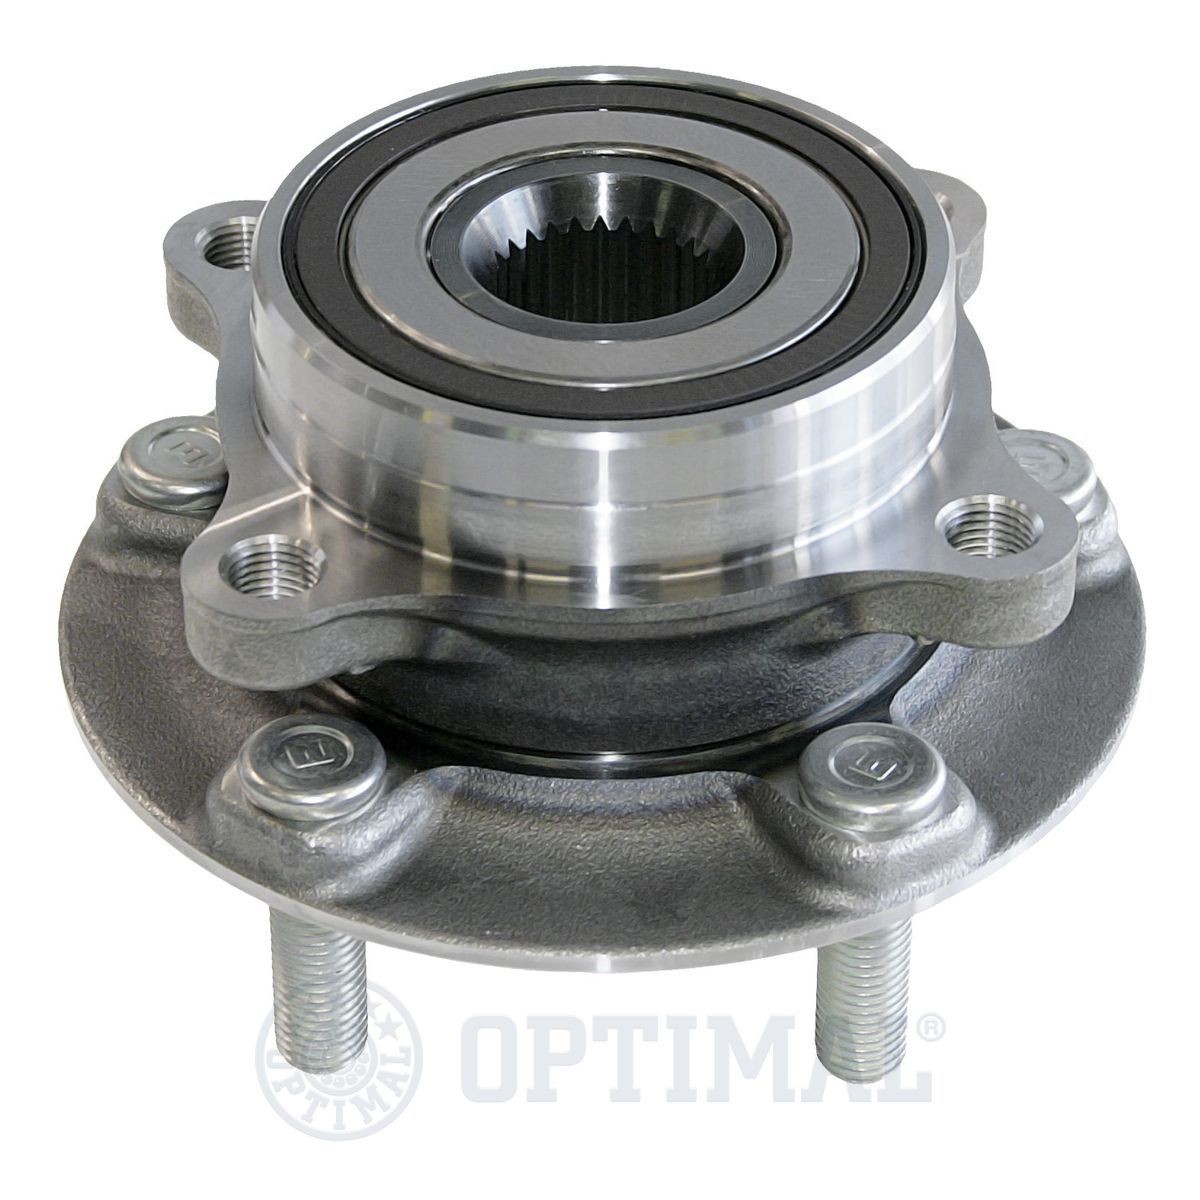 951831 OPTIMAL Wheel bearings MITSUBISHI with integrated magnetic sensor ring, 139, 87 mm